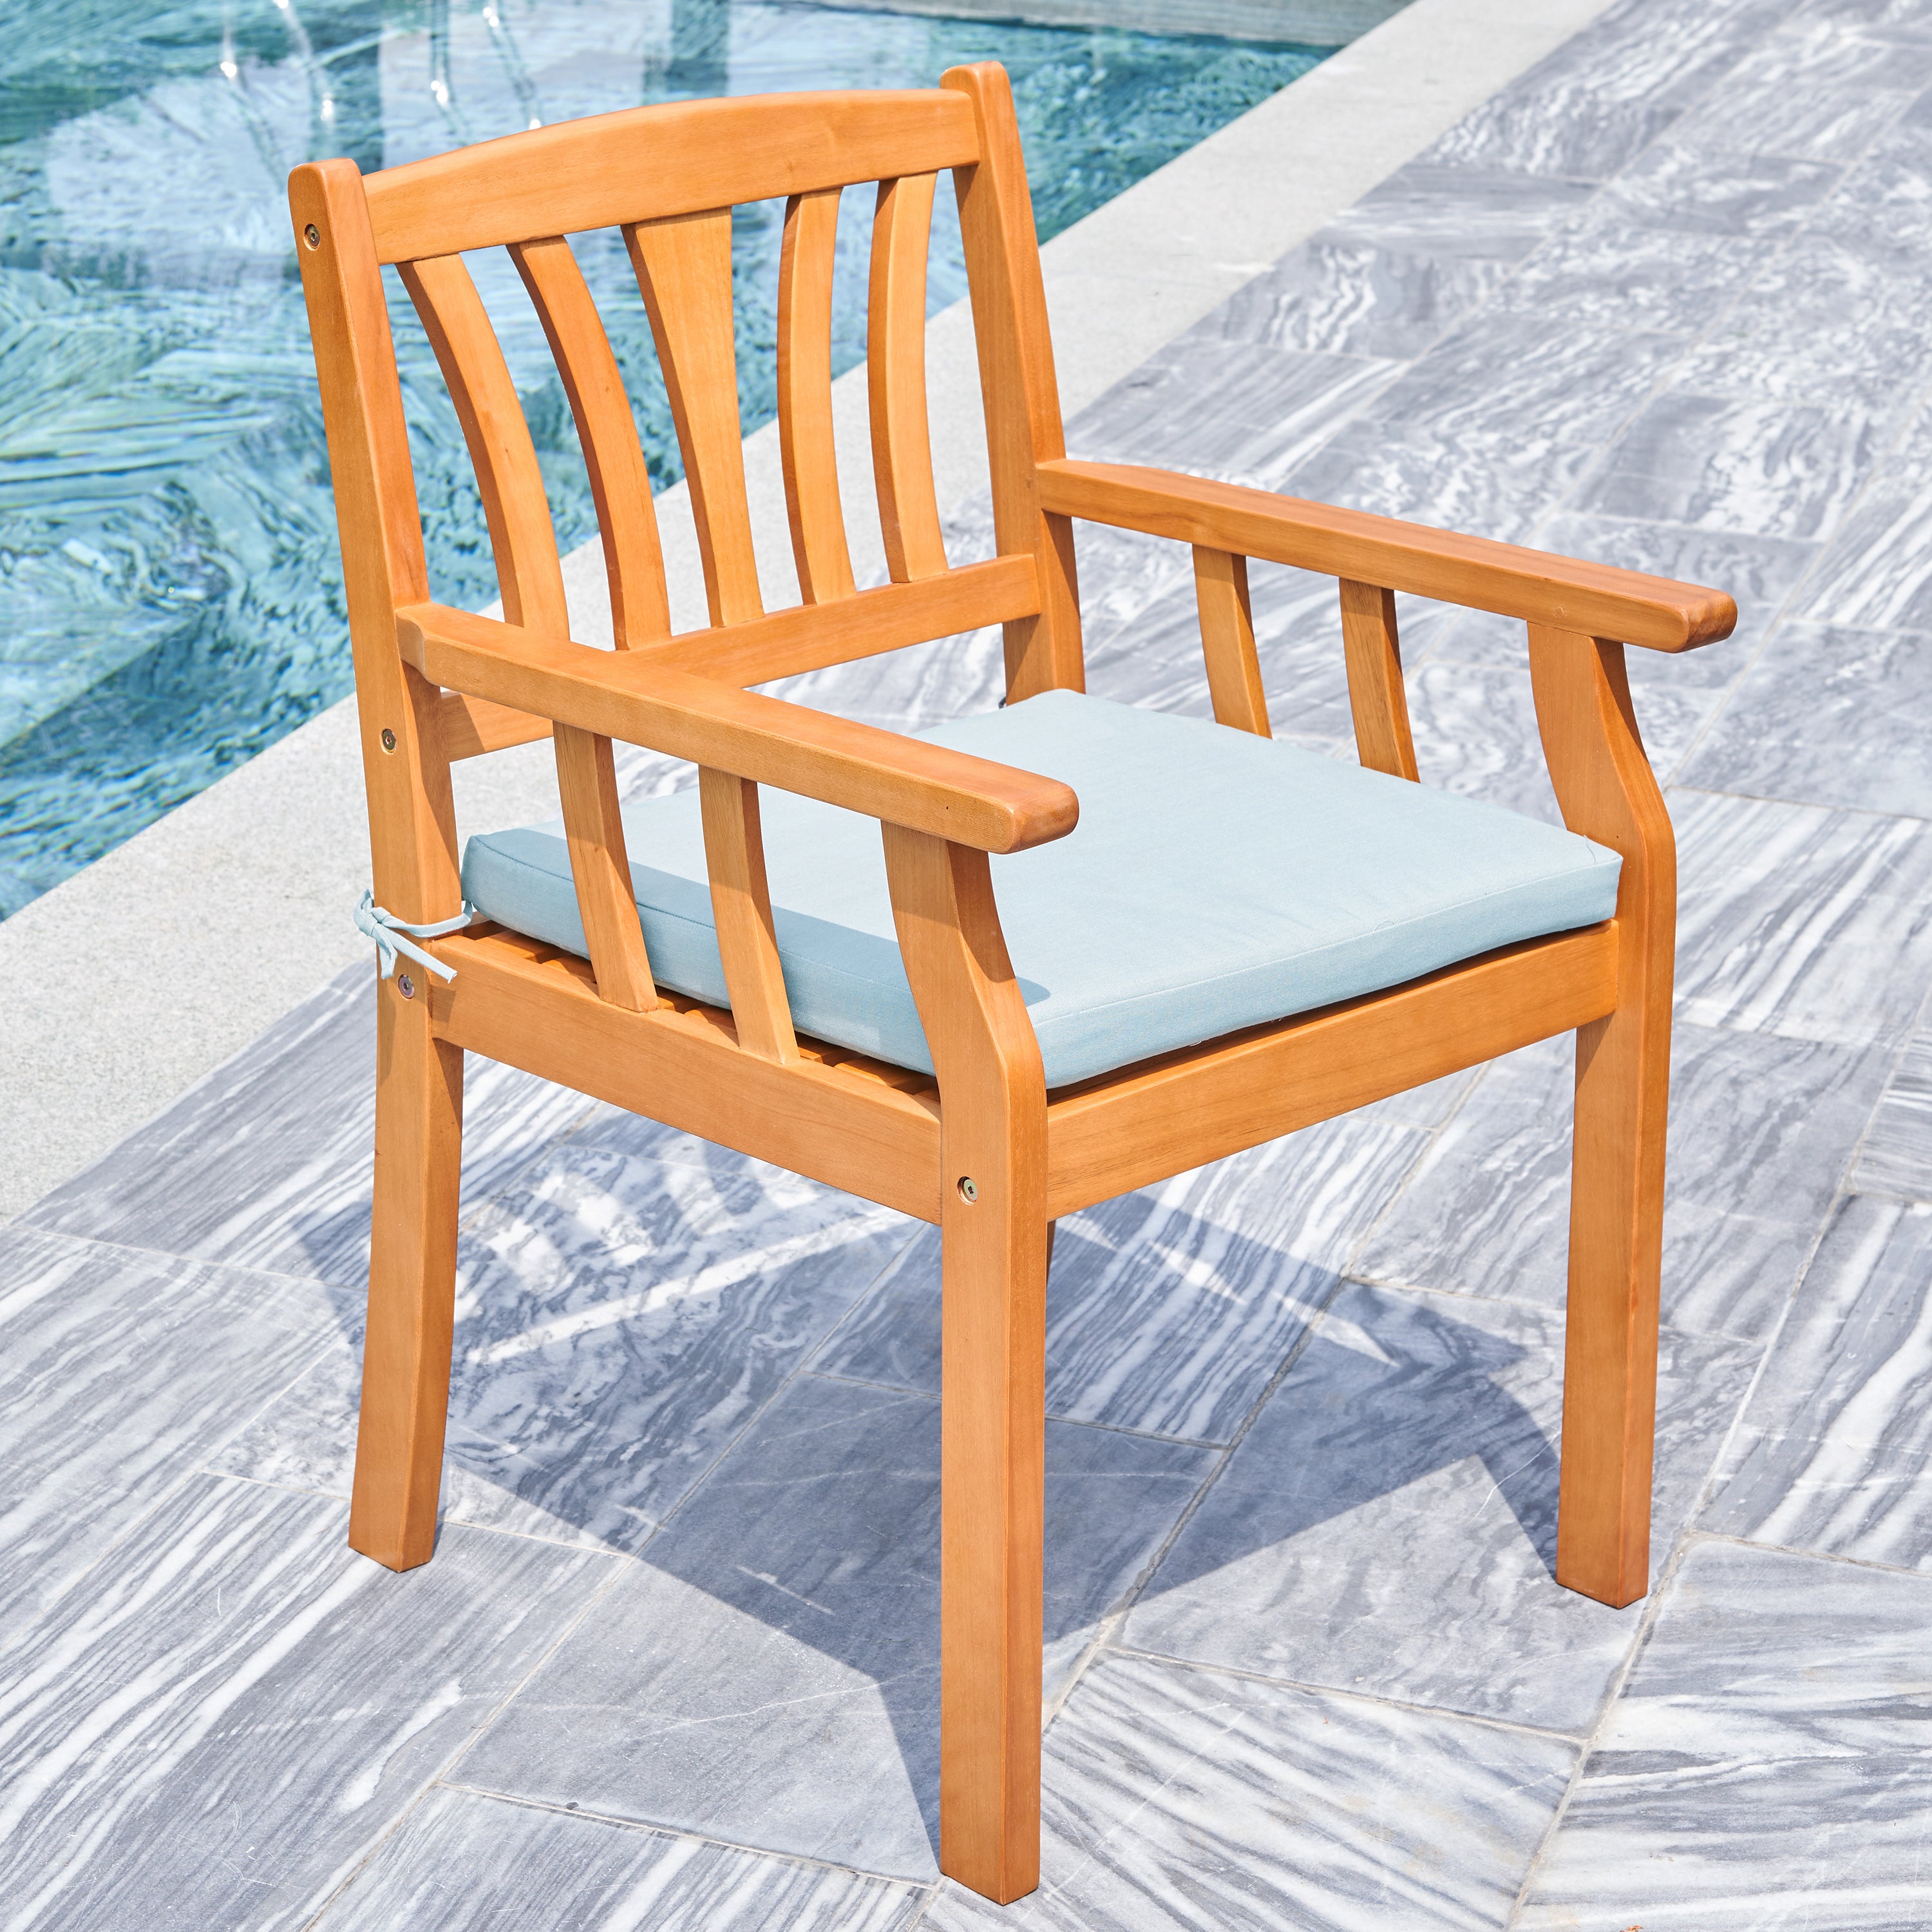 Kapalua-Honey-Nautical-Outdoor-Eucalyptus--Wooden-Dining-Chair-Furniture-|-Outdoor-Furniture-|-Outdoor-Seating-|-Outdoor-Chairs